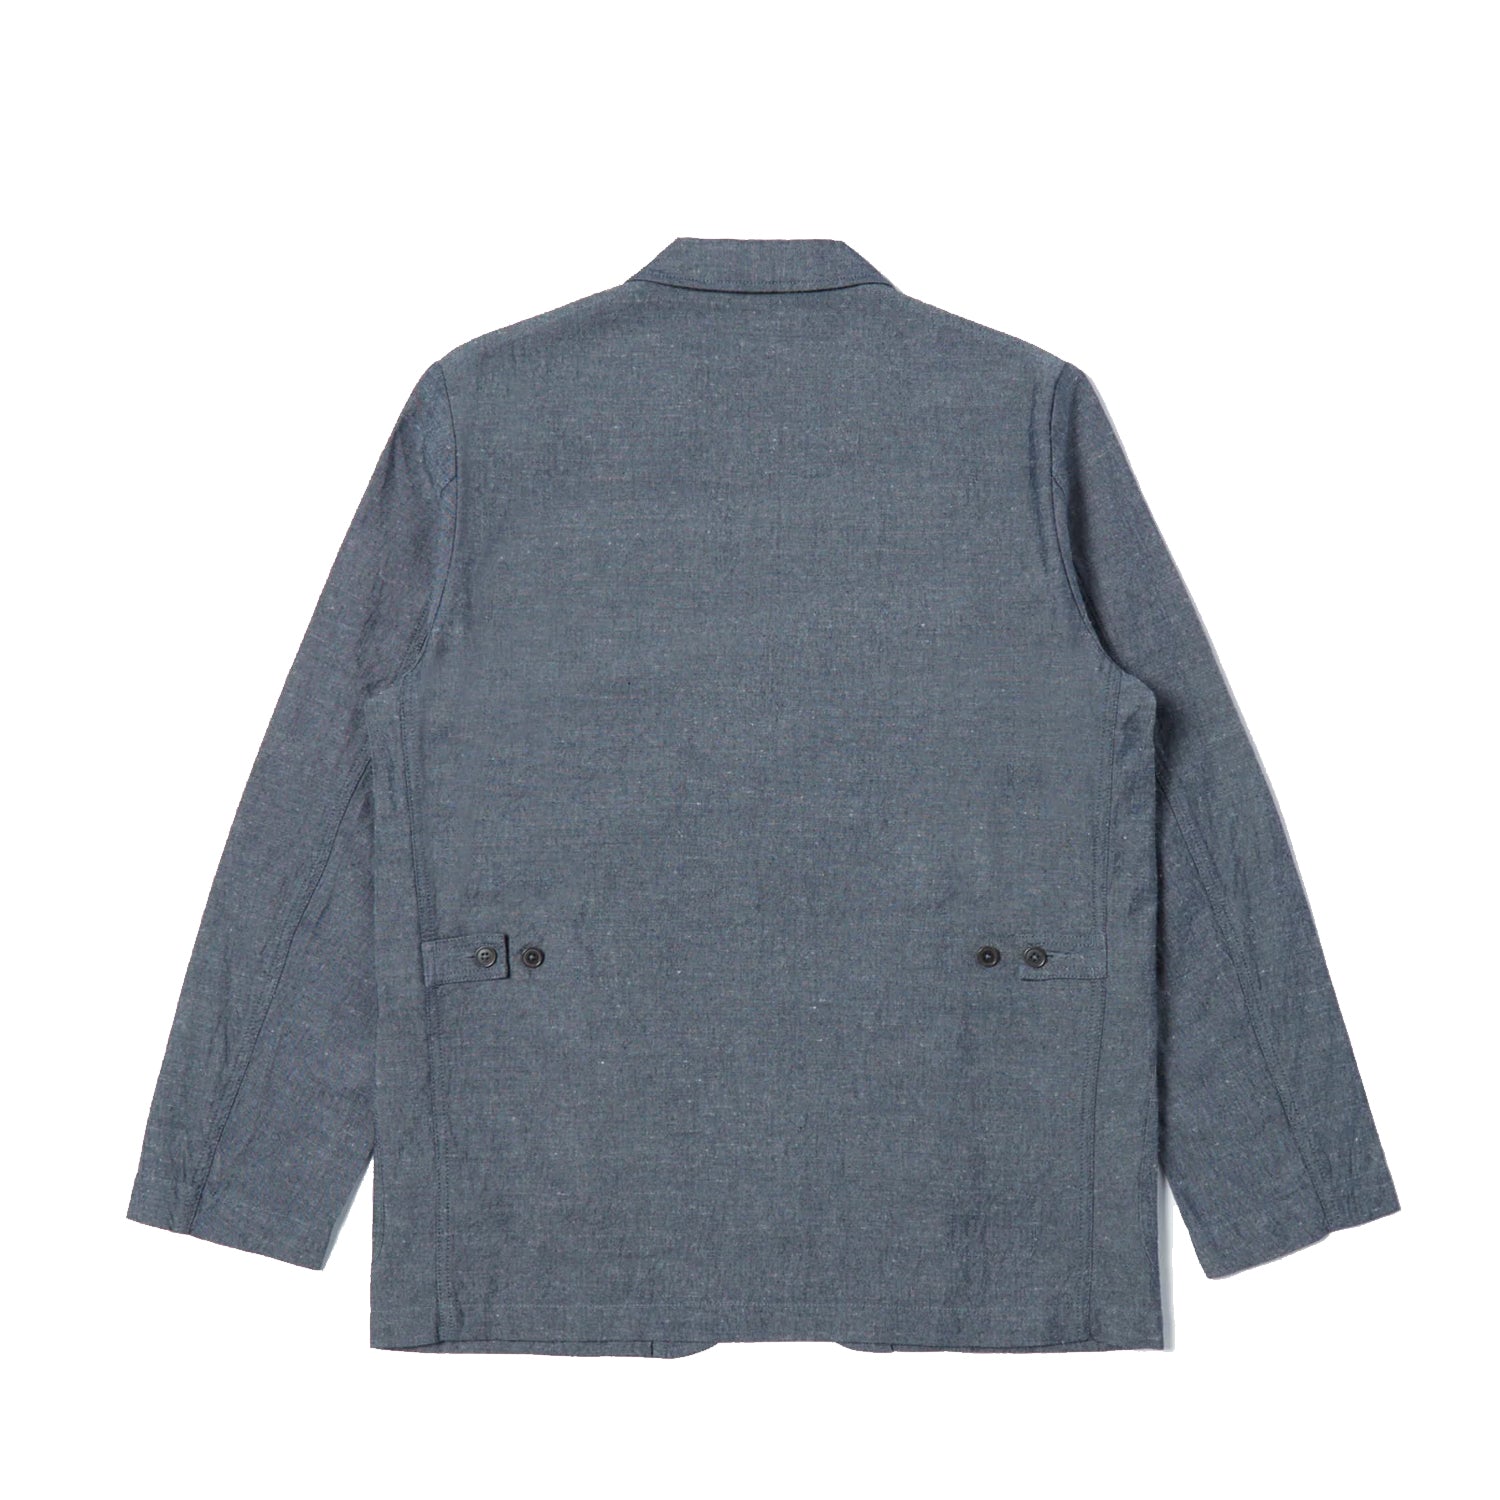 Five Pocket Jacket - Lord Cotton / Linen